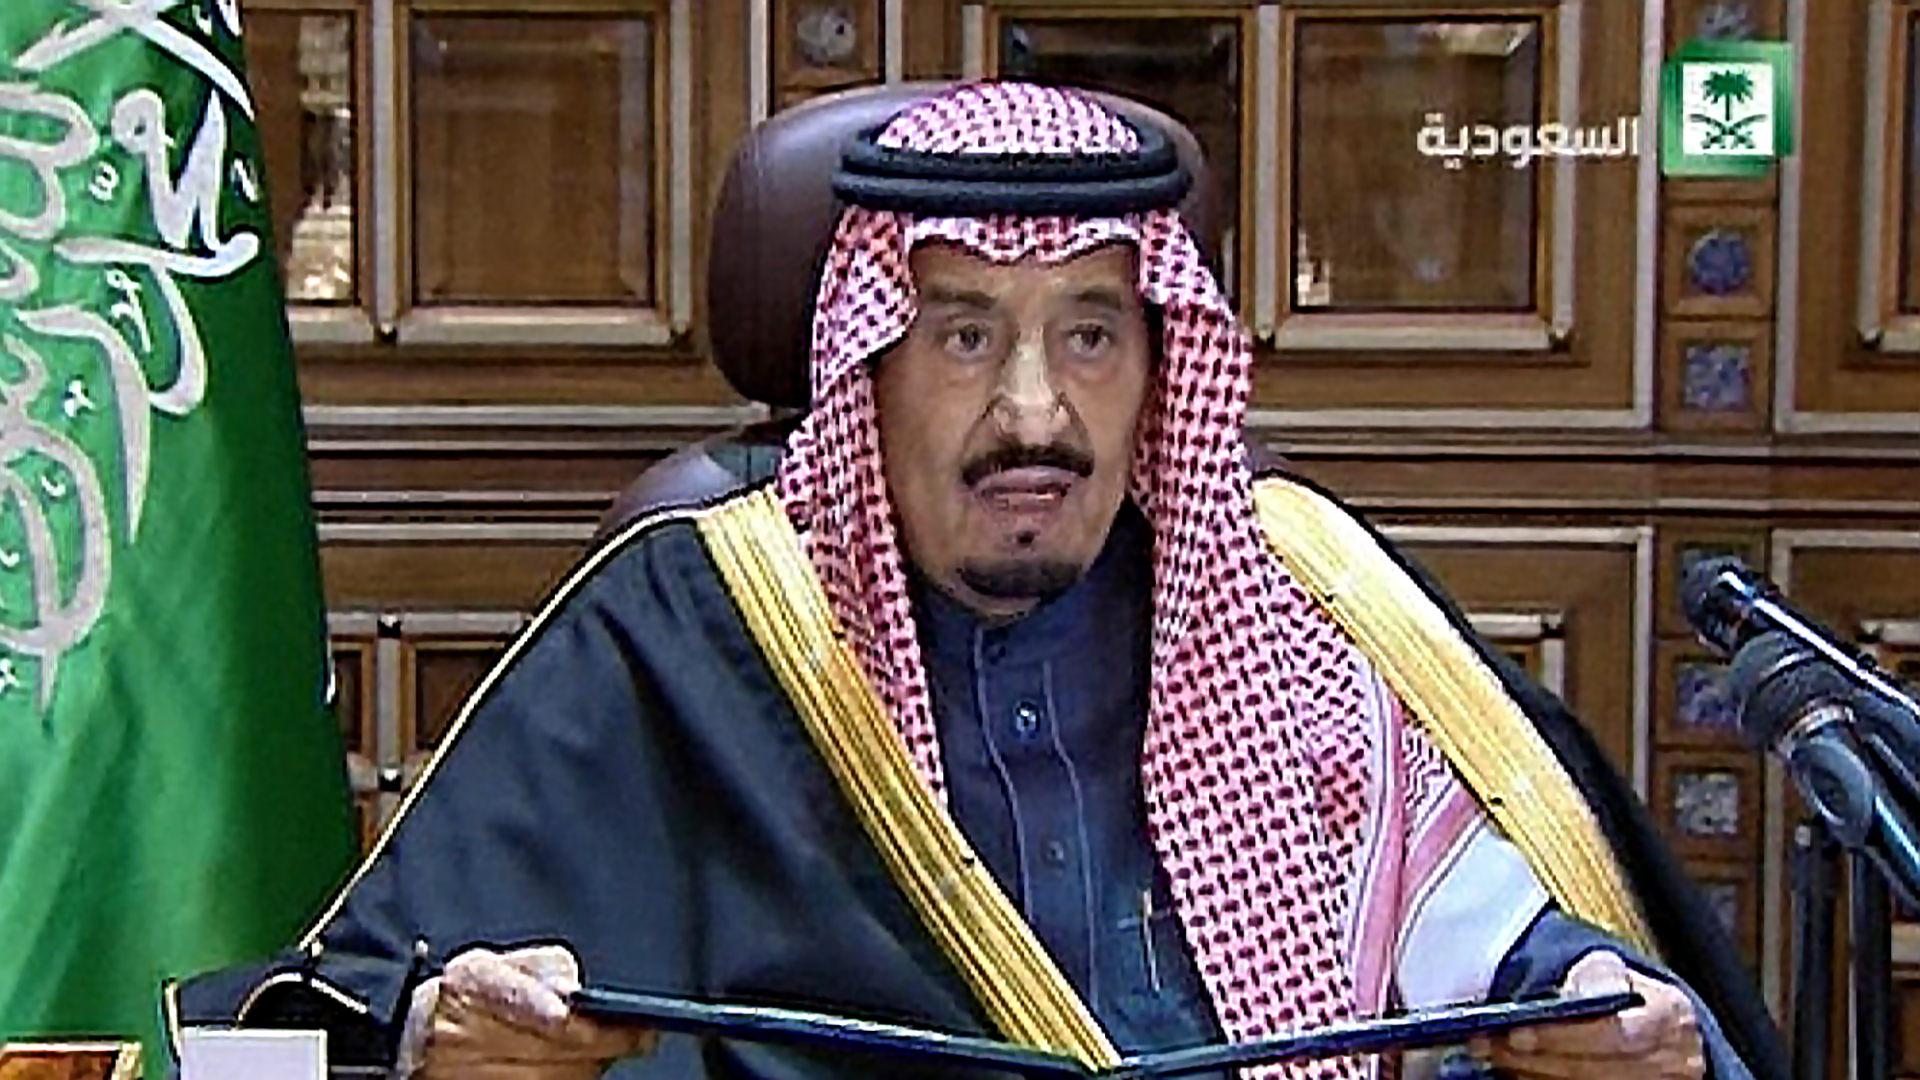 Saudi arabias king salman pledges to keep straight path